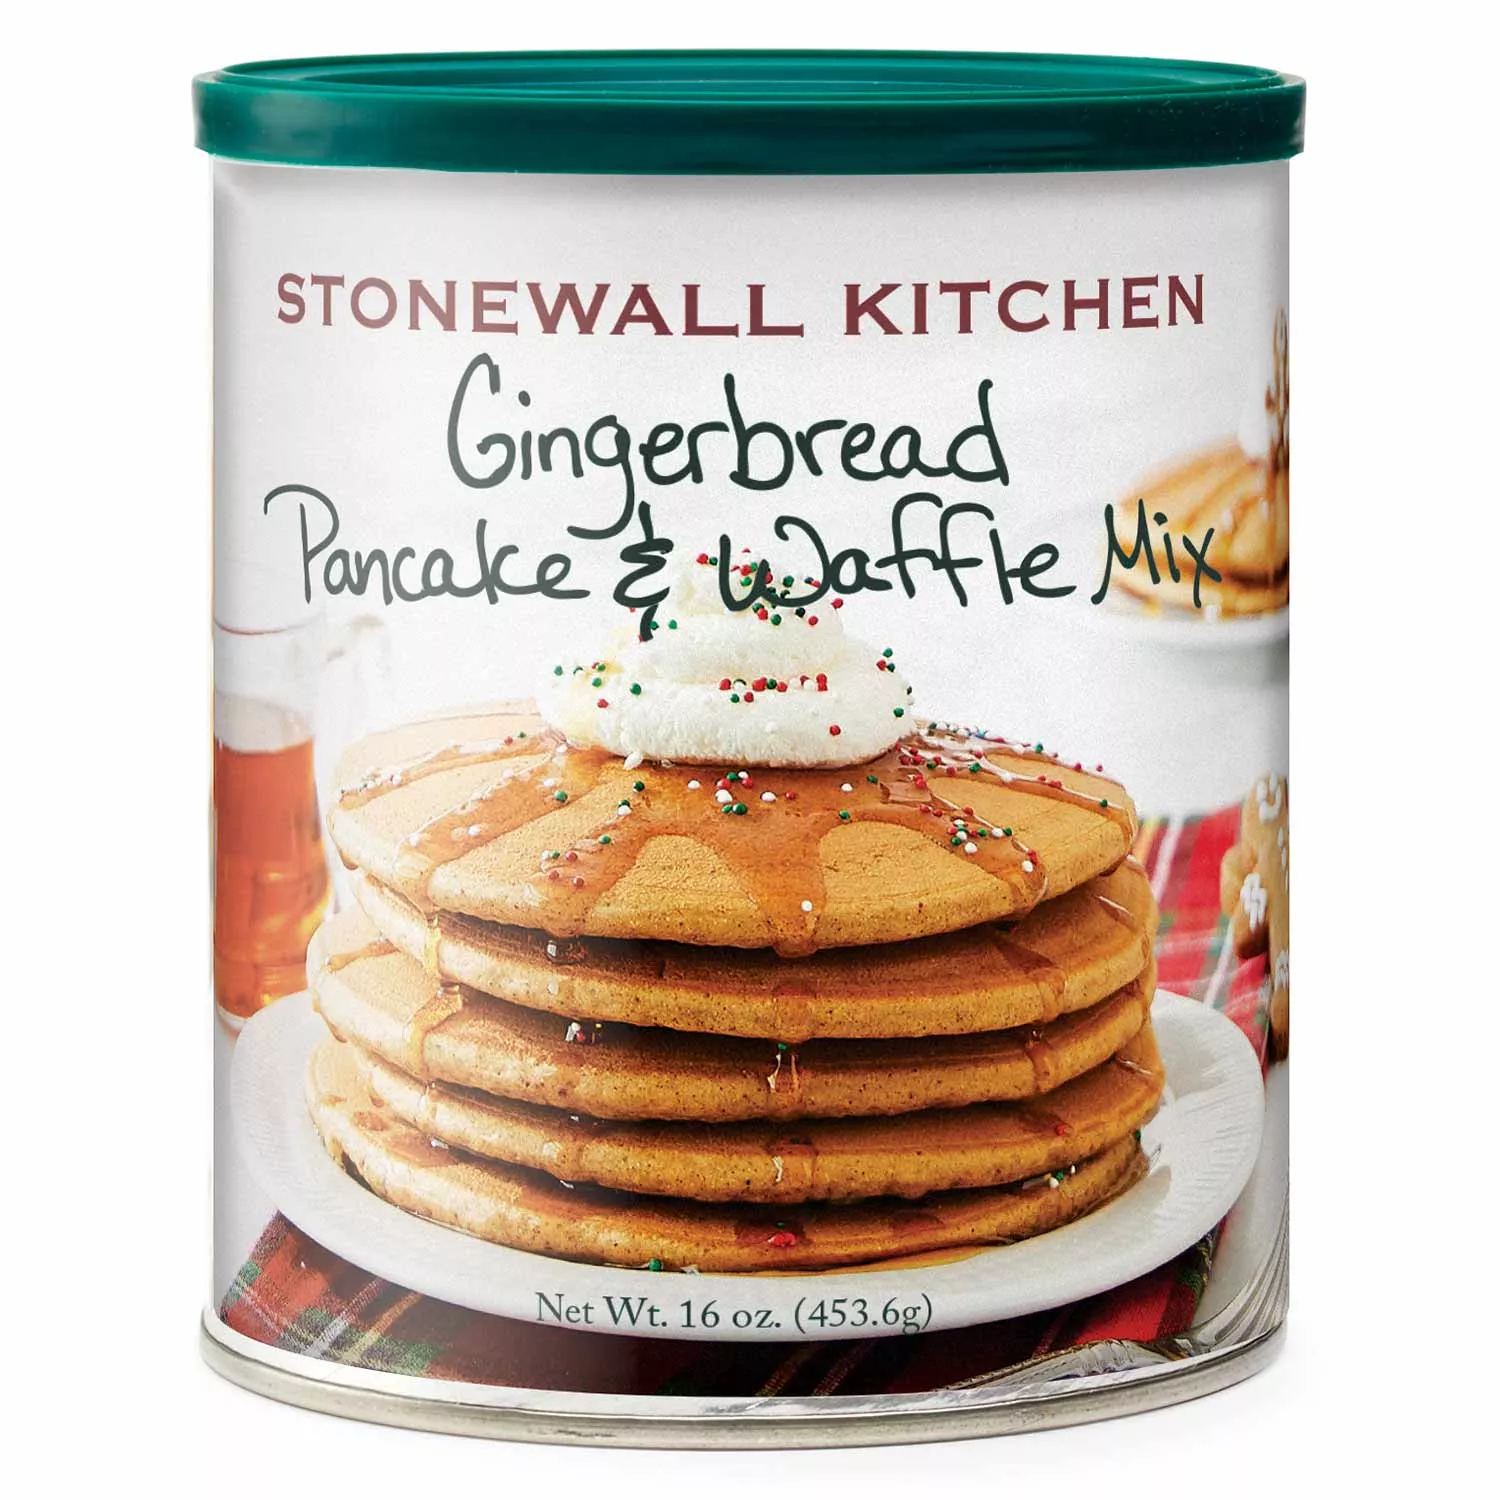 Stonewall Kitchen Crepe Pan & Mix